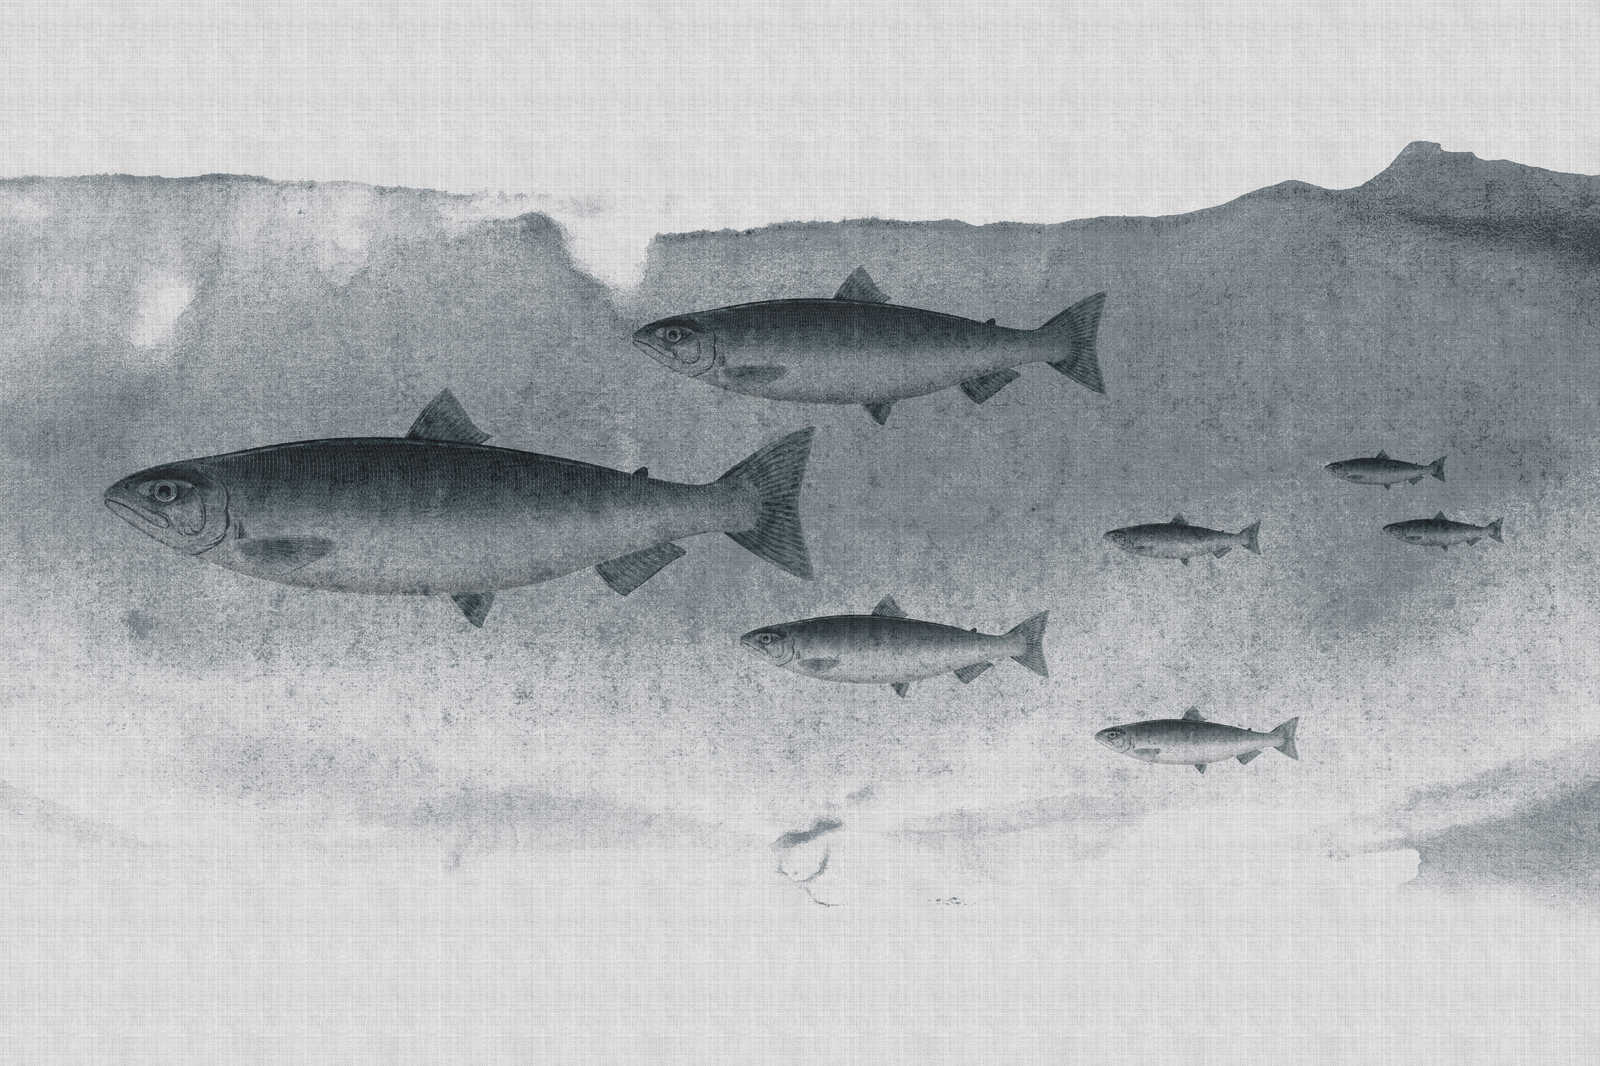             Into the blue 3 - Fisch Aquarell in Grau als Leinwandbild in naturleinen Struktur – 0,90 m x 0,60 m
        